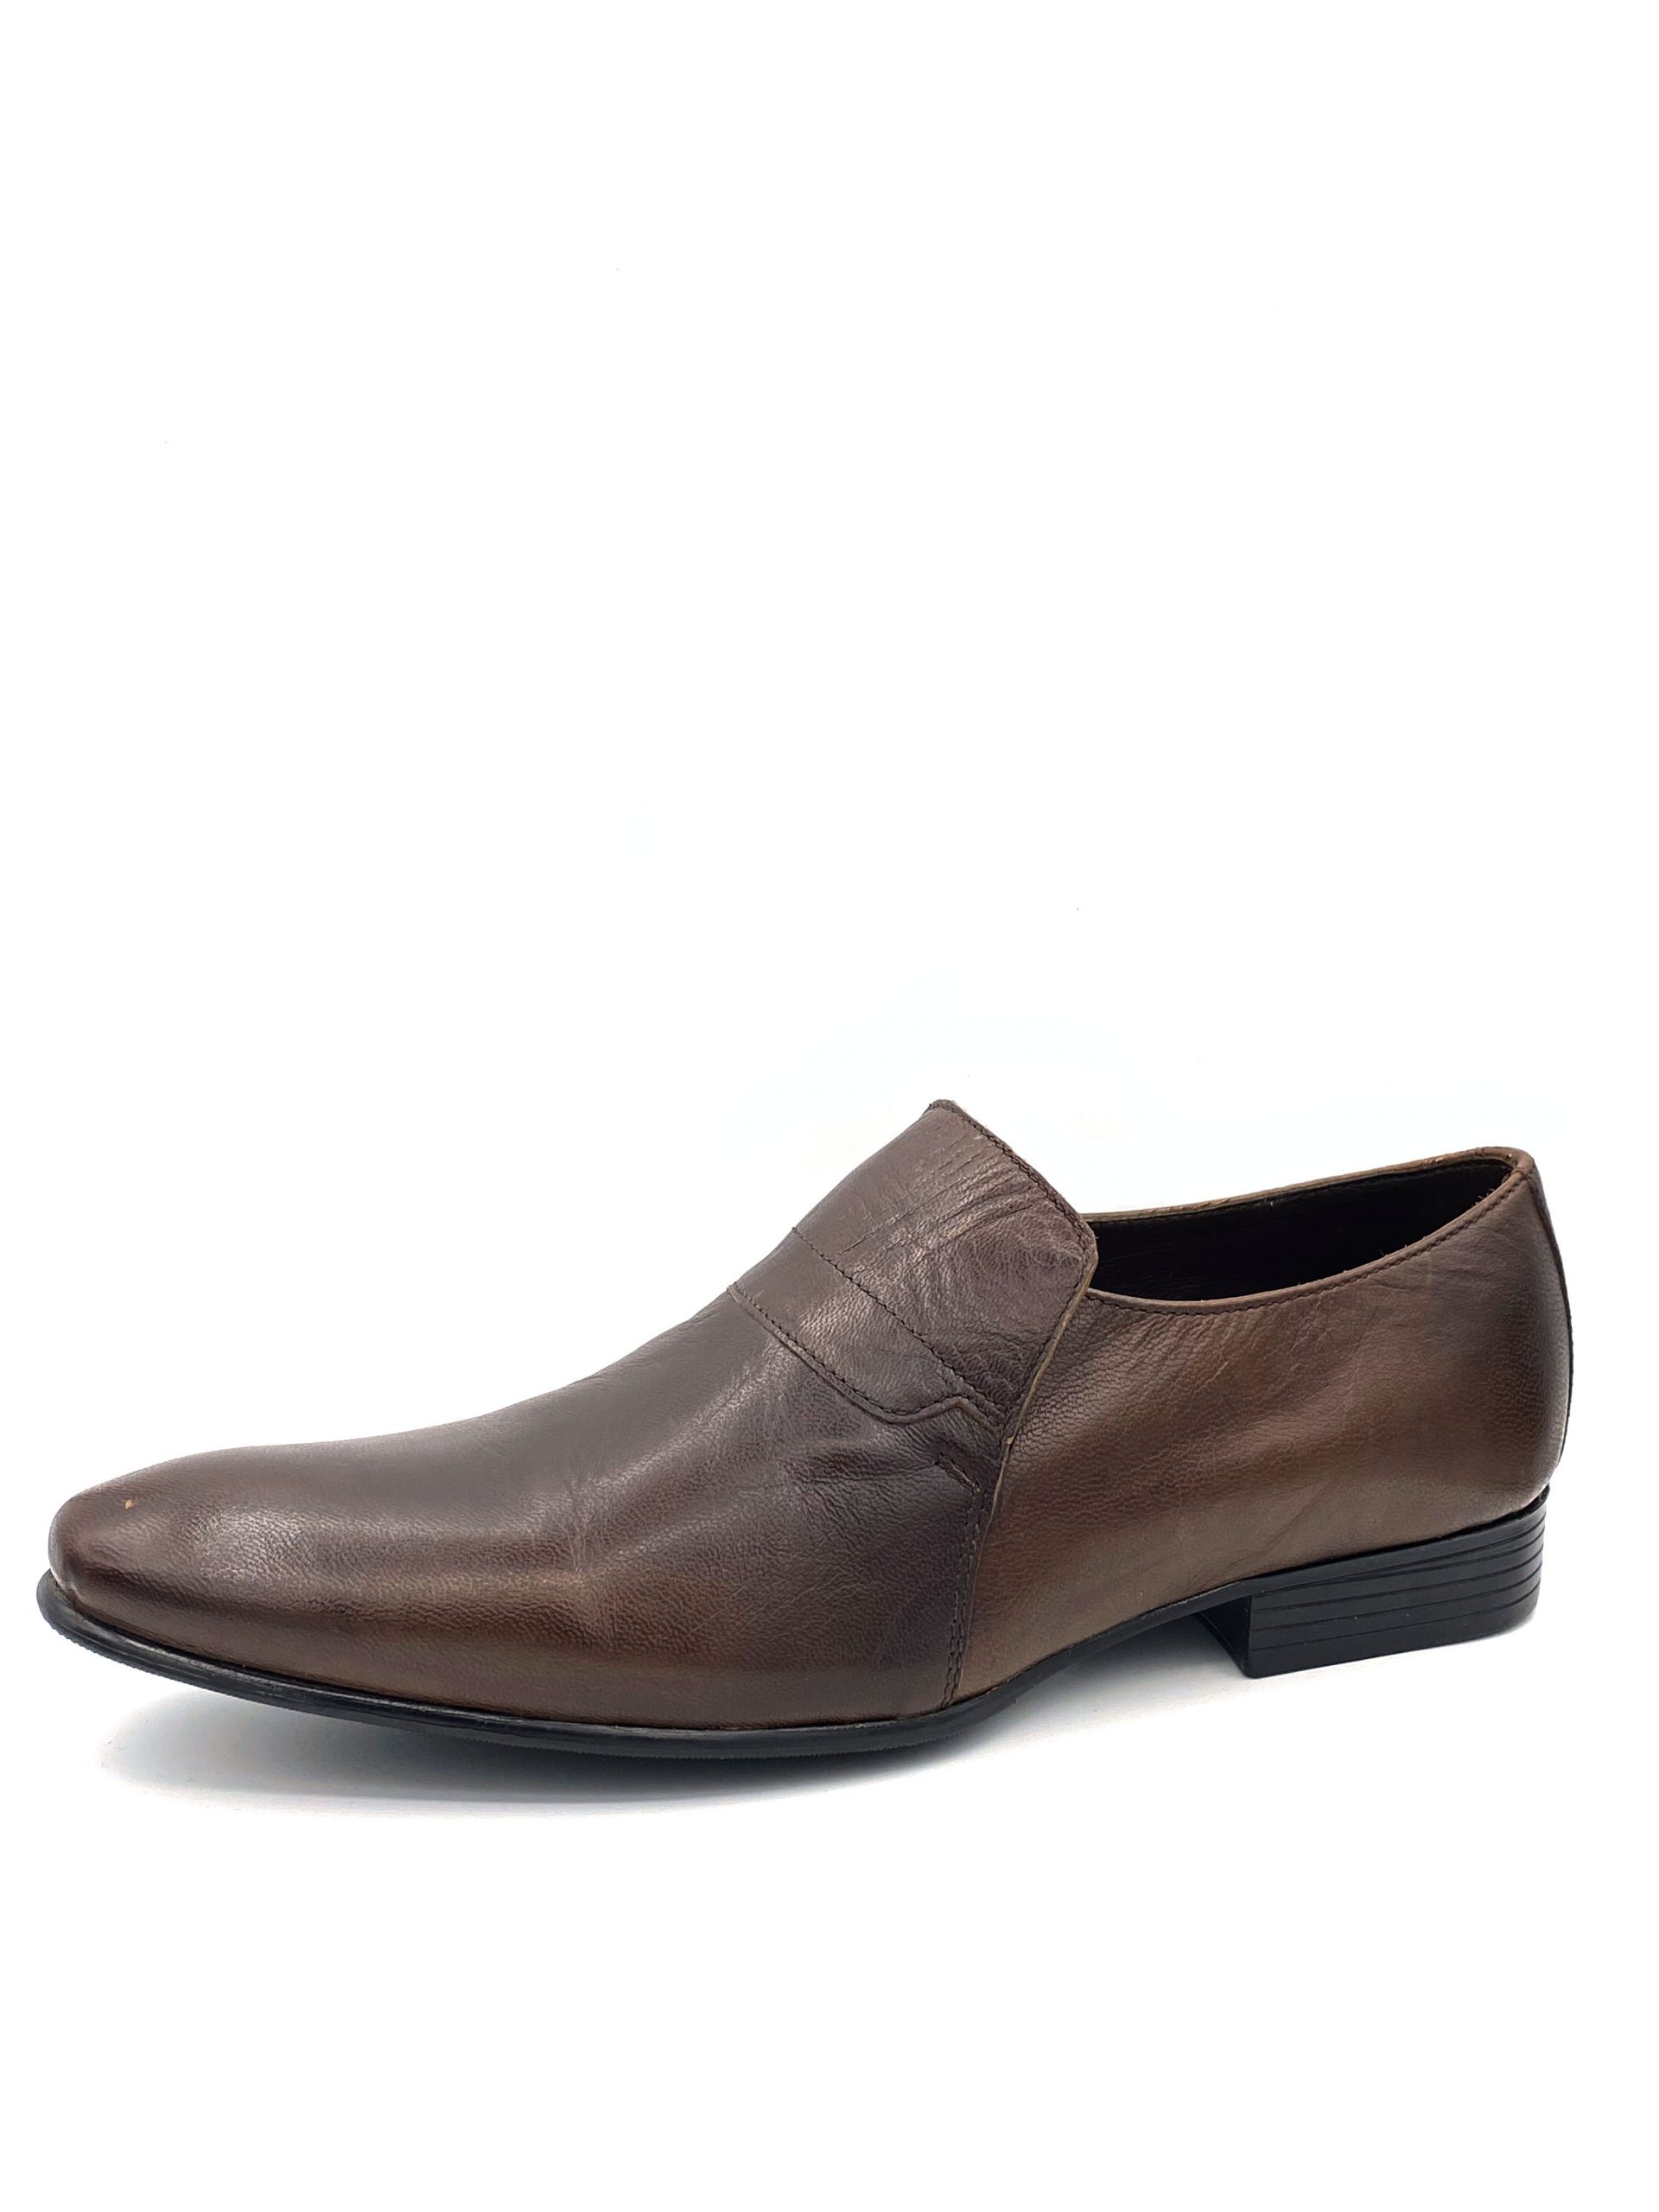 Shuaat men's oxford classic, formal shoes, brown - ZONA ZERO